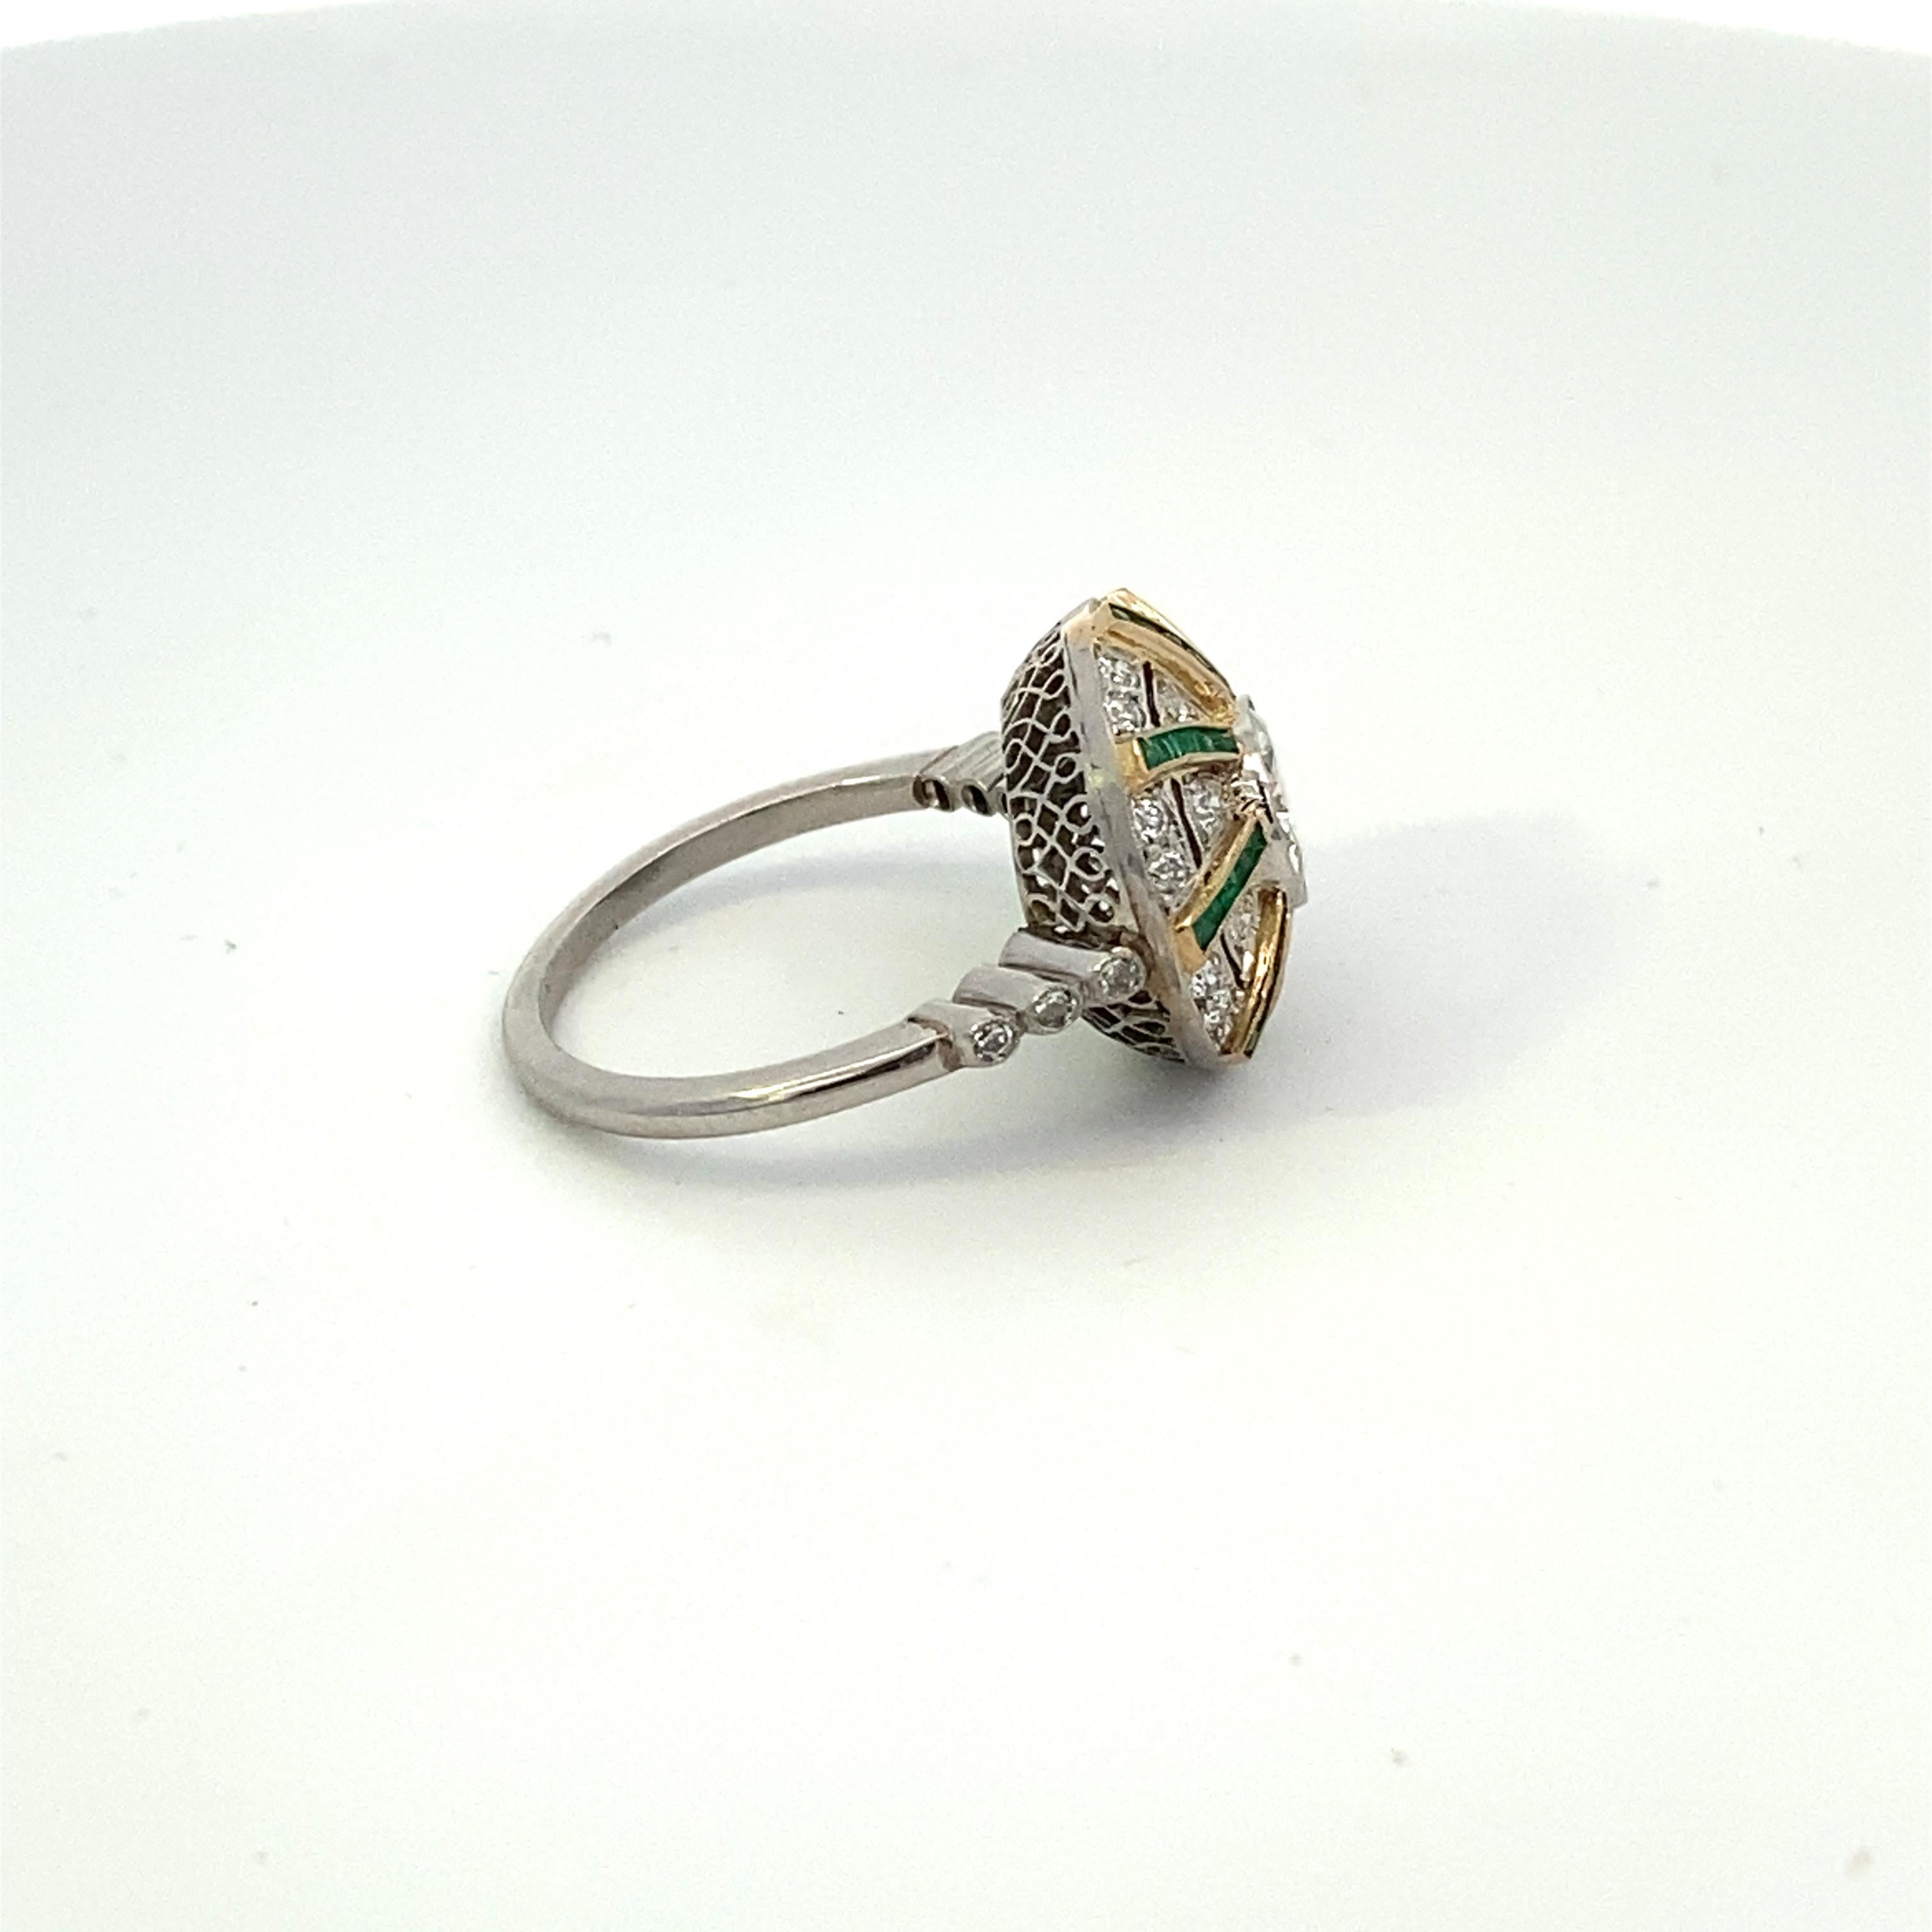 Art Deco platinum ring with 1.04 carat Old European Cut center diamond and 1 carat total weight emeralds and .90 carat total weight diamonds. Size 7 US